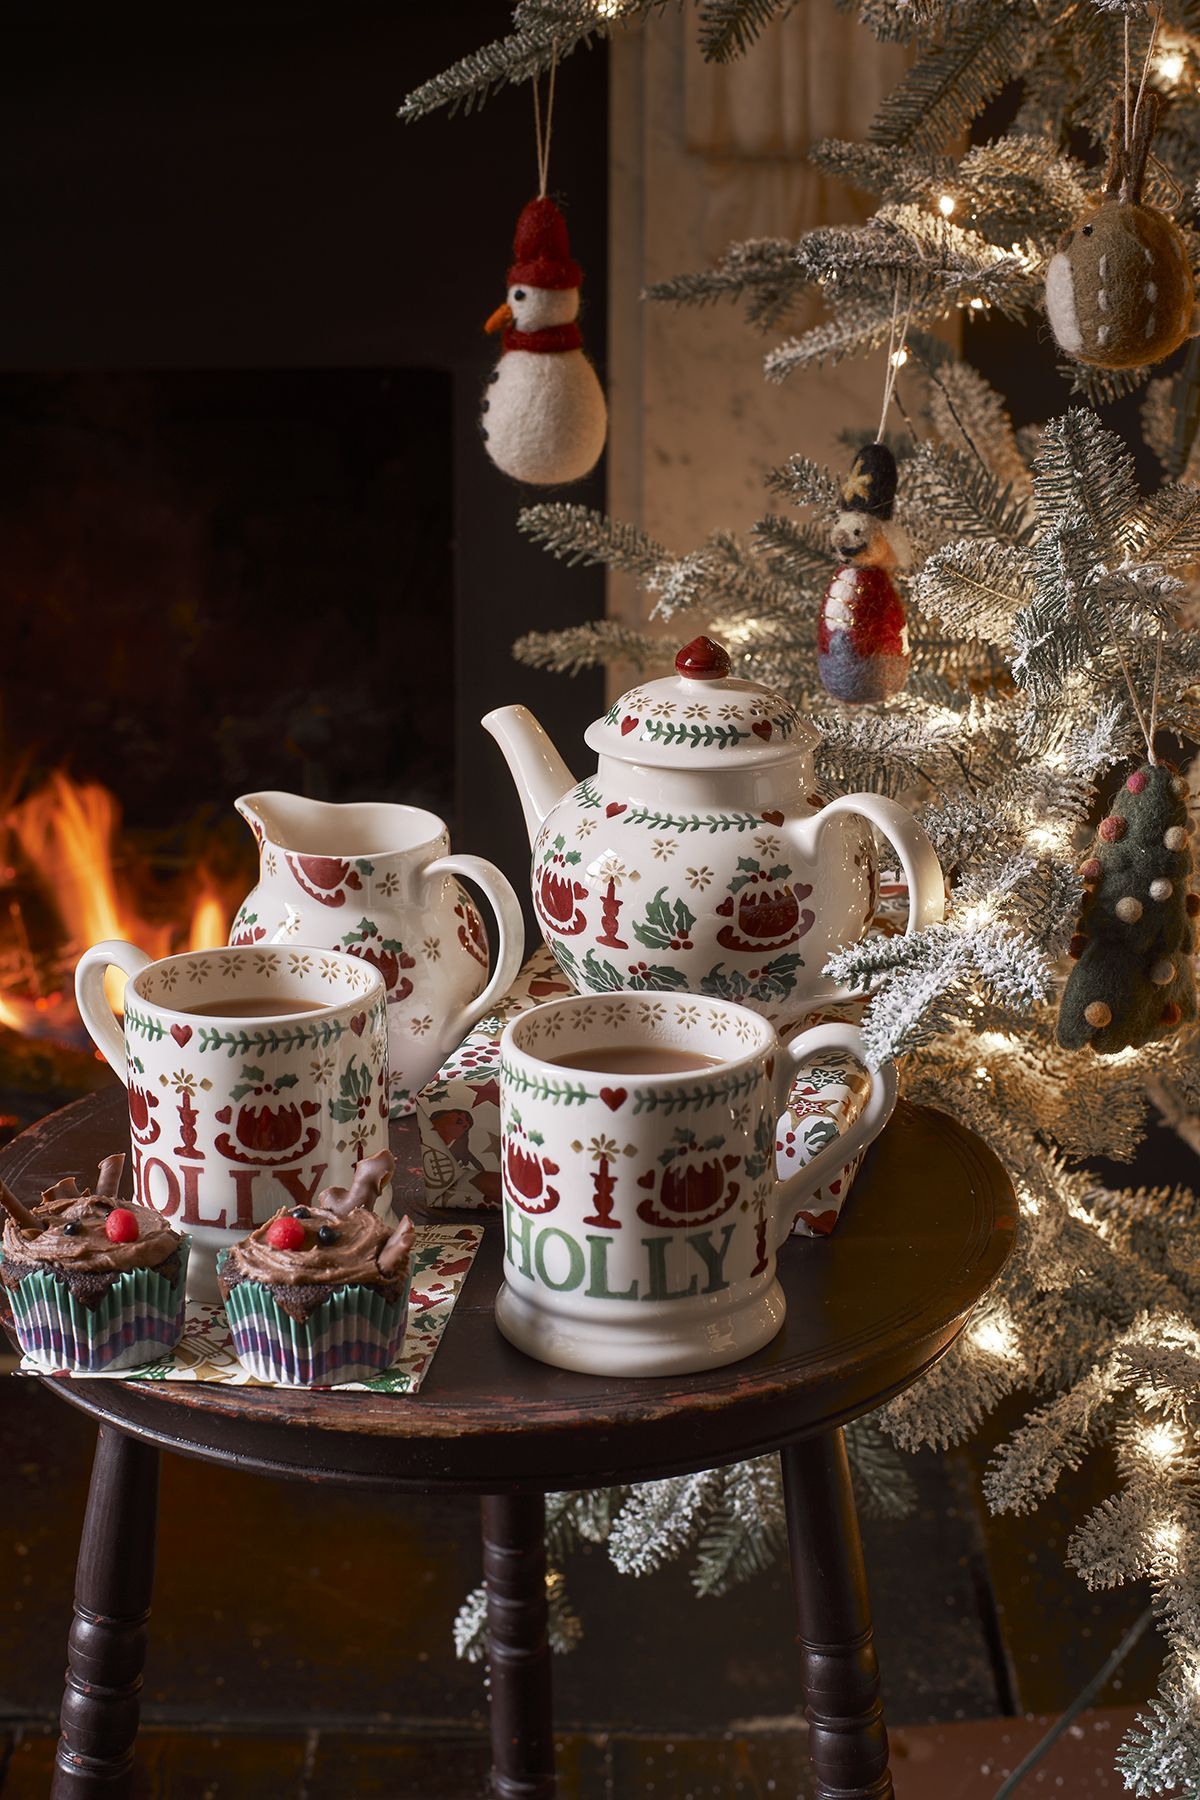 Christmas Film Stocking Filler Christmas Eve Box Gift for family Secret Santa Gift Personalised Love Christmas Name Ceramic Mug Cup